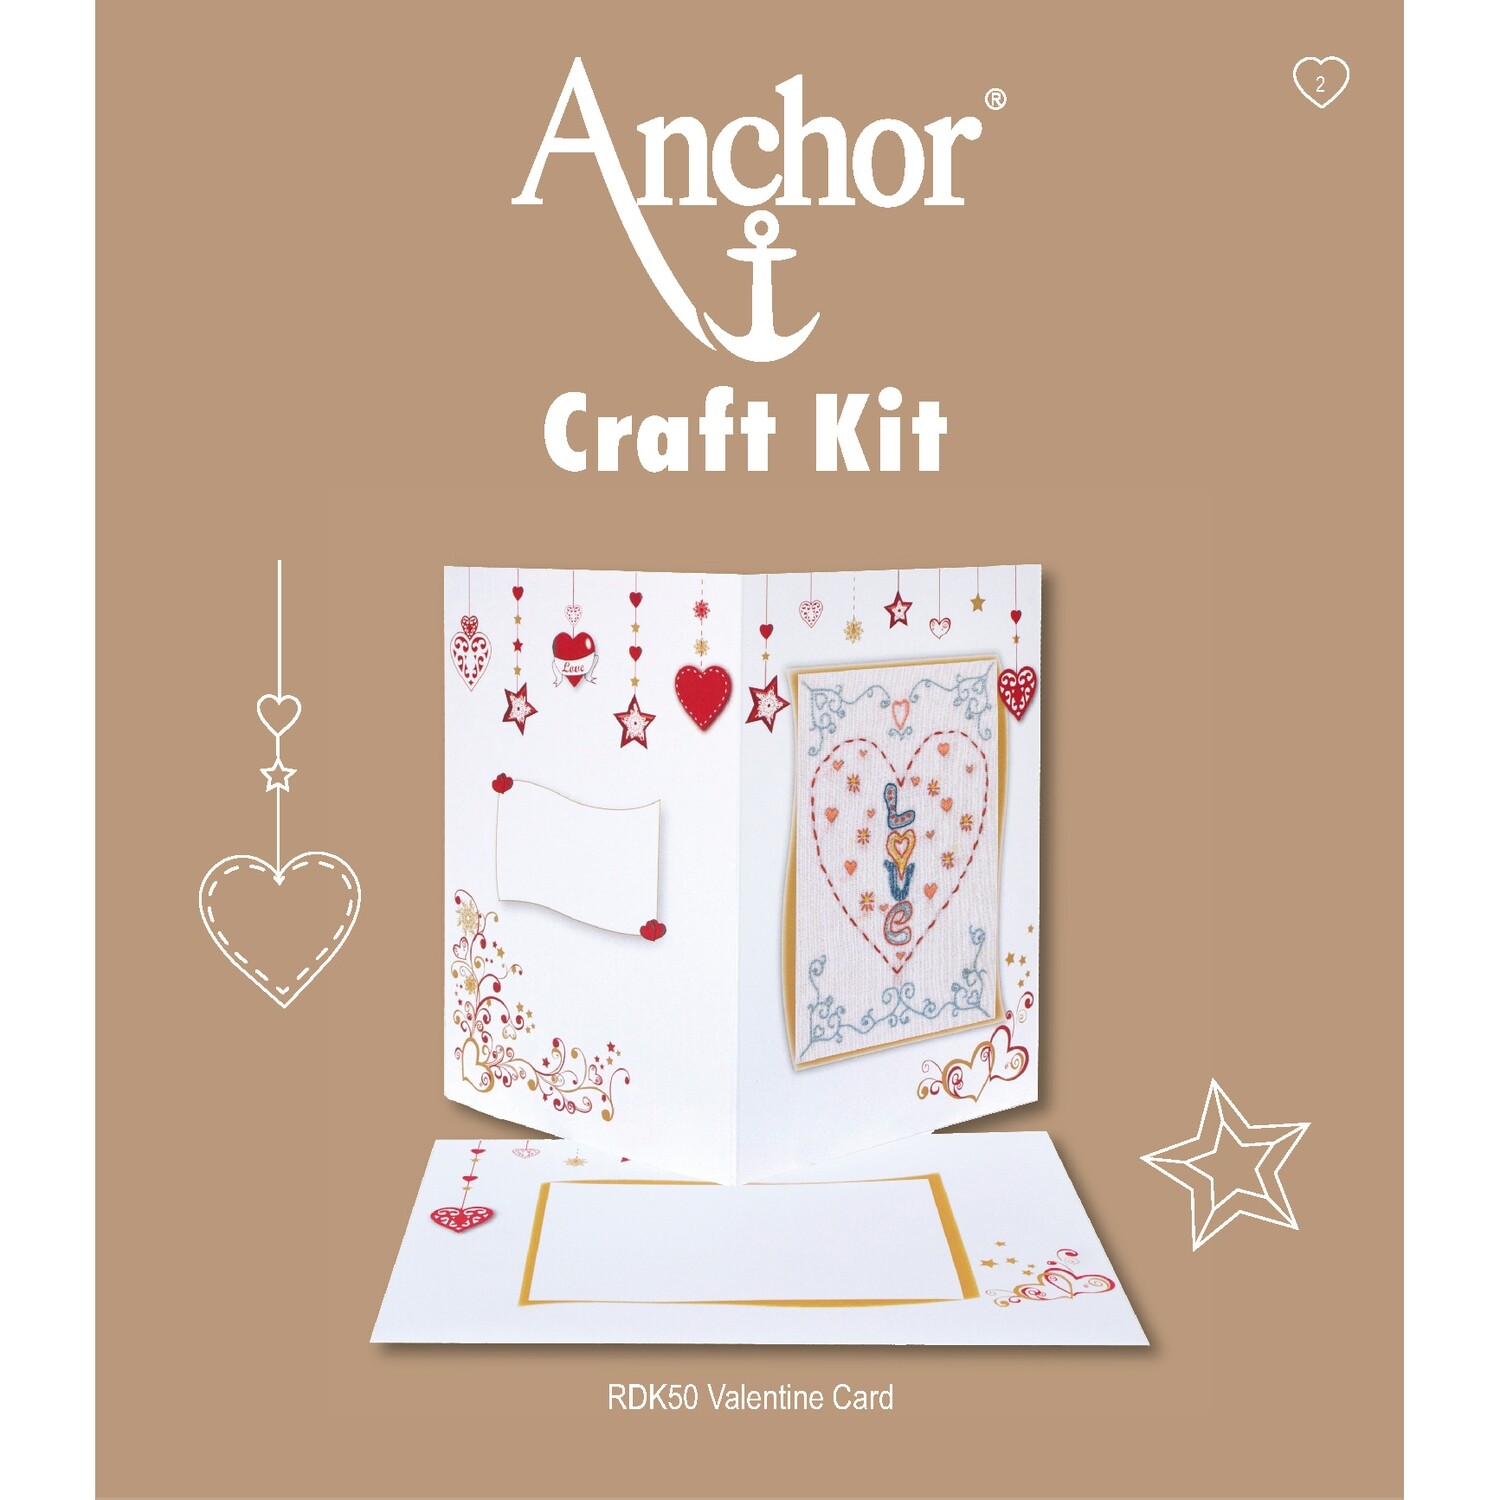 Anchor Craft Kit - Valentine Card